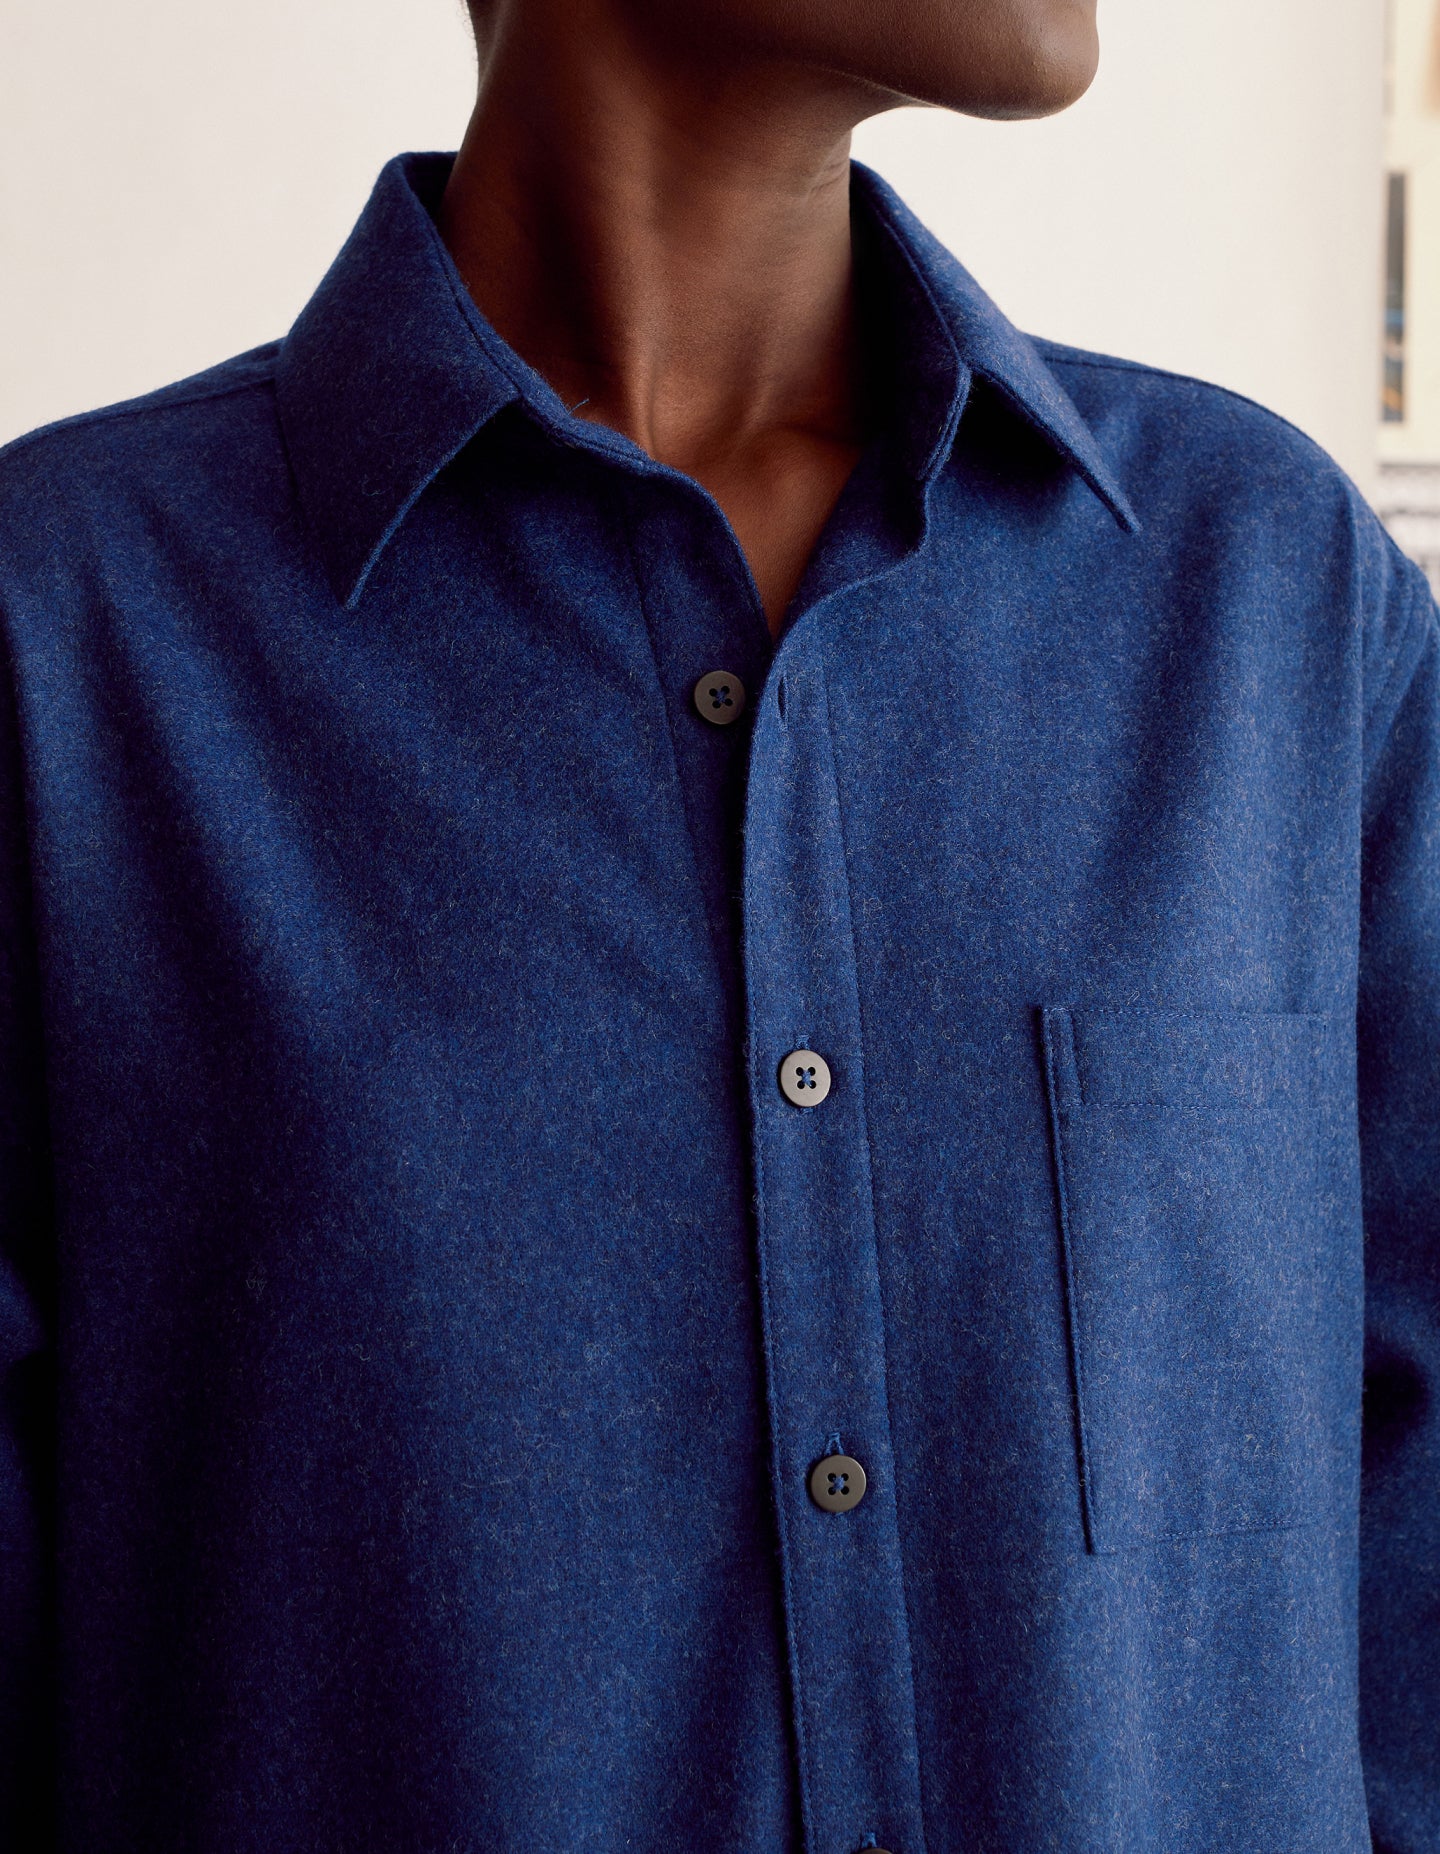 The Shirtdress (Moonlight Blue Merino Wool)